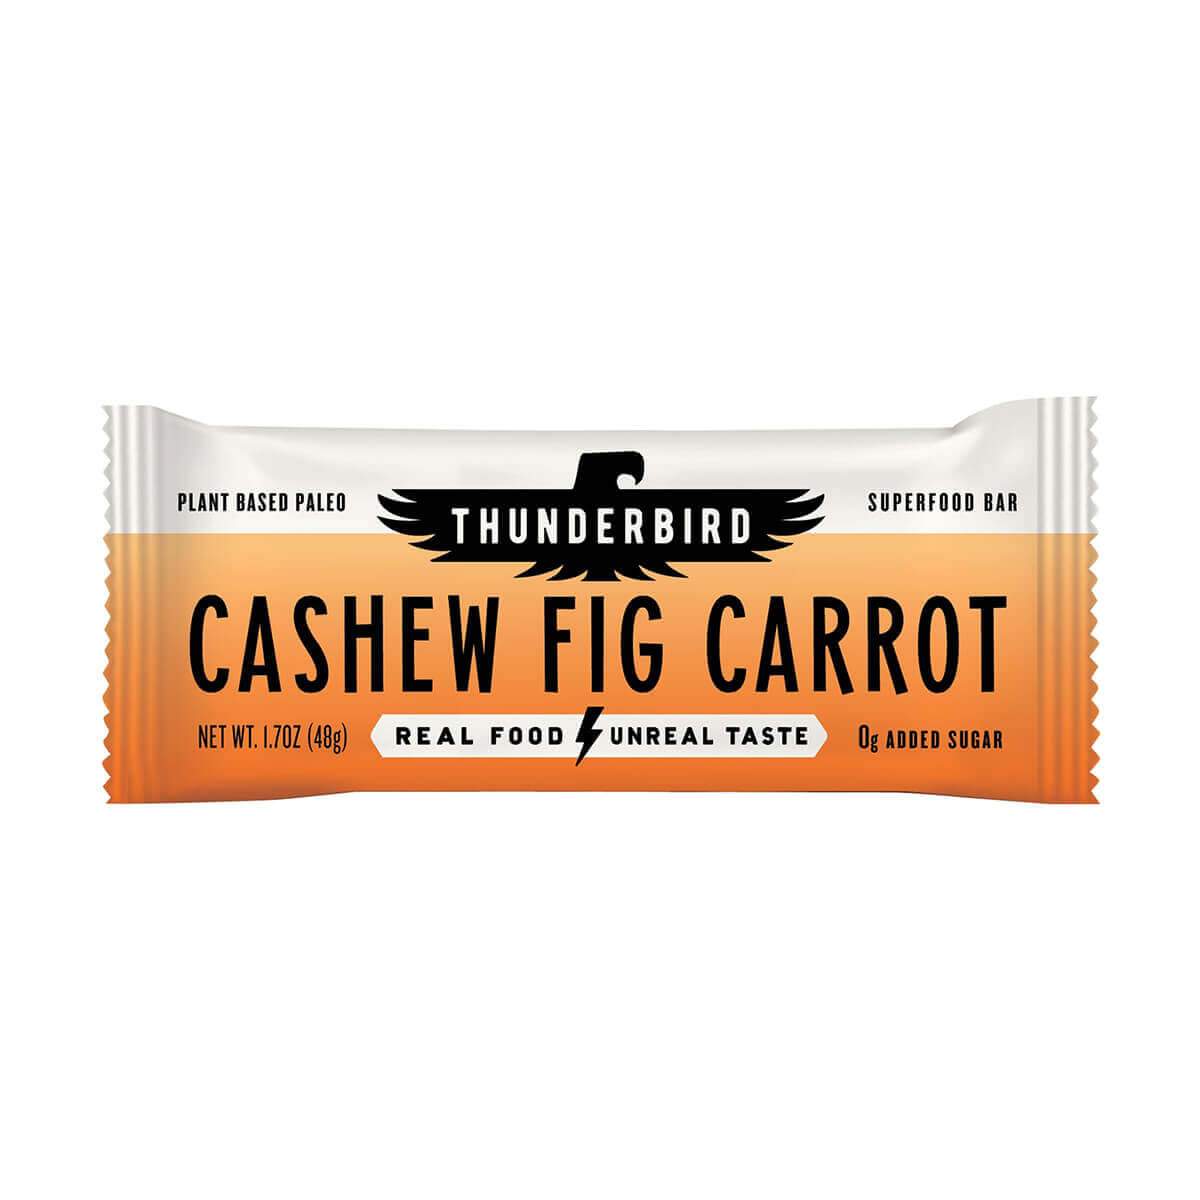 Cashew Fig Carrot - Box of 12 Bars